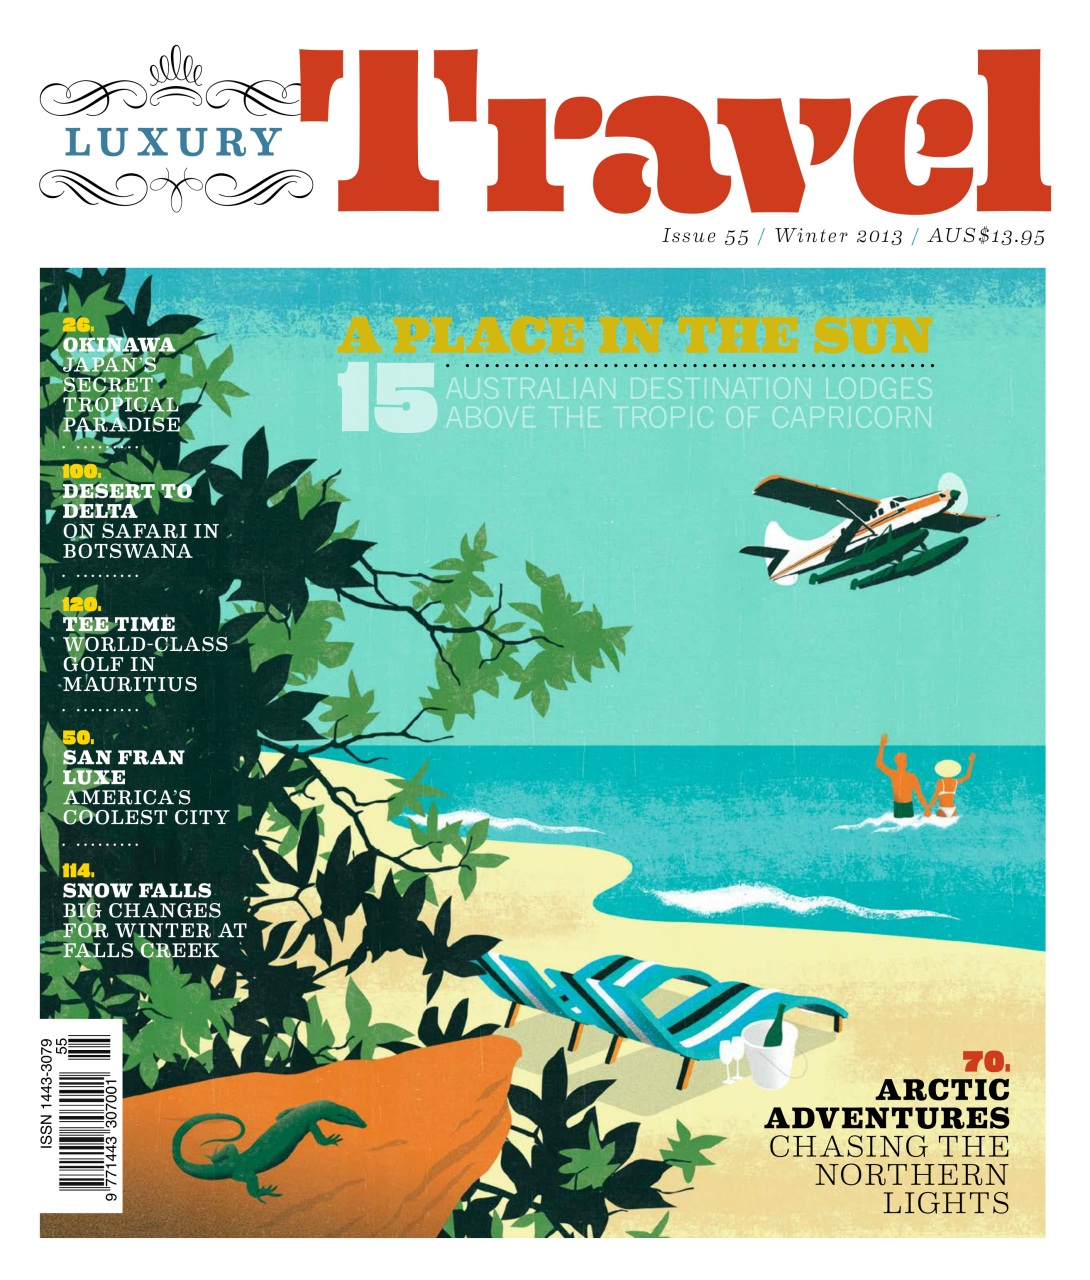 Traveling magazine. Журнал о путешествиях. Travel журналы. Travel Magazine обложка. Американский журнал путешествия.